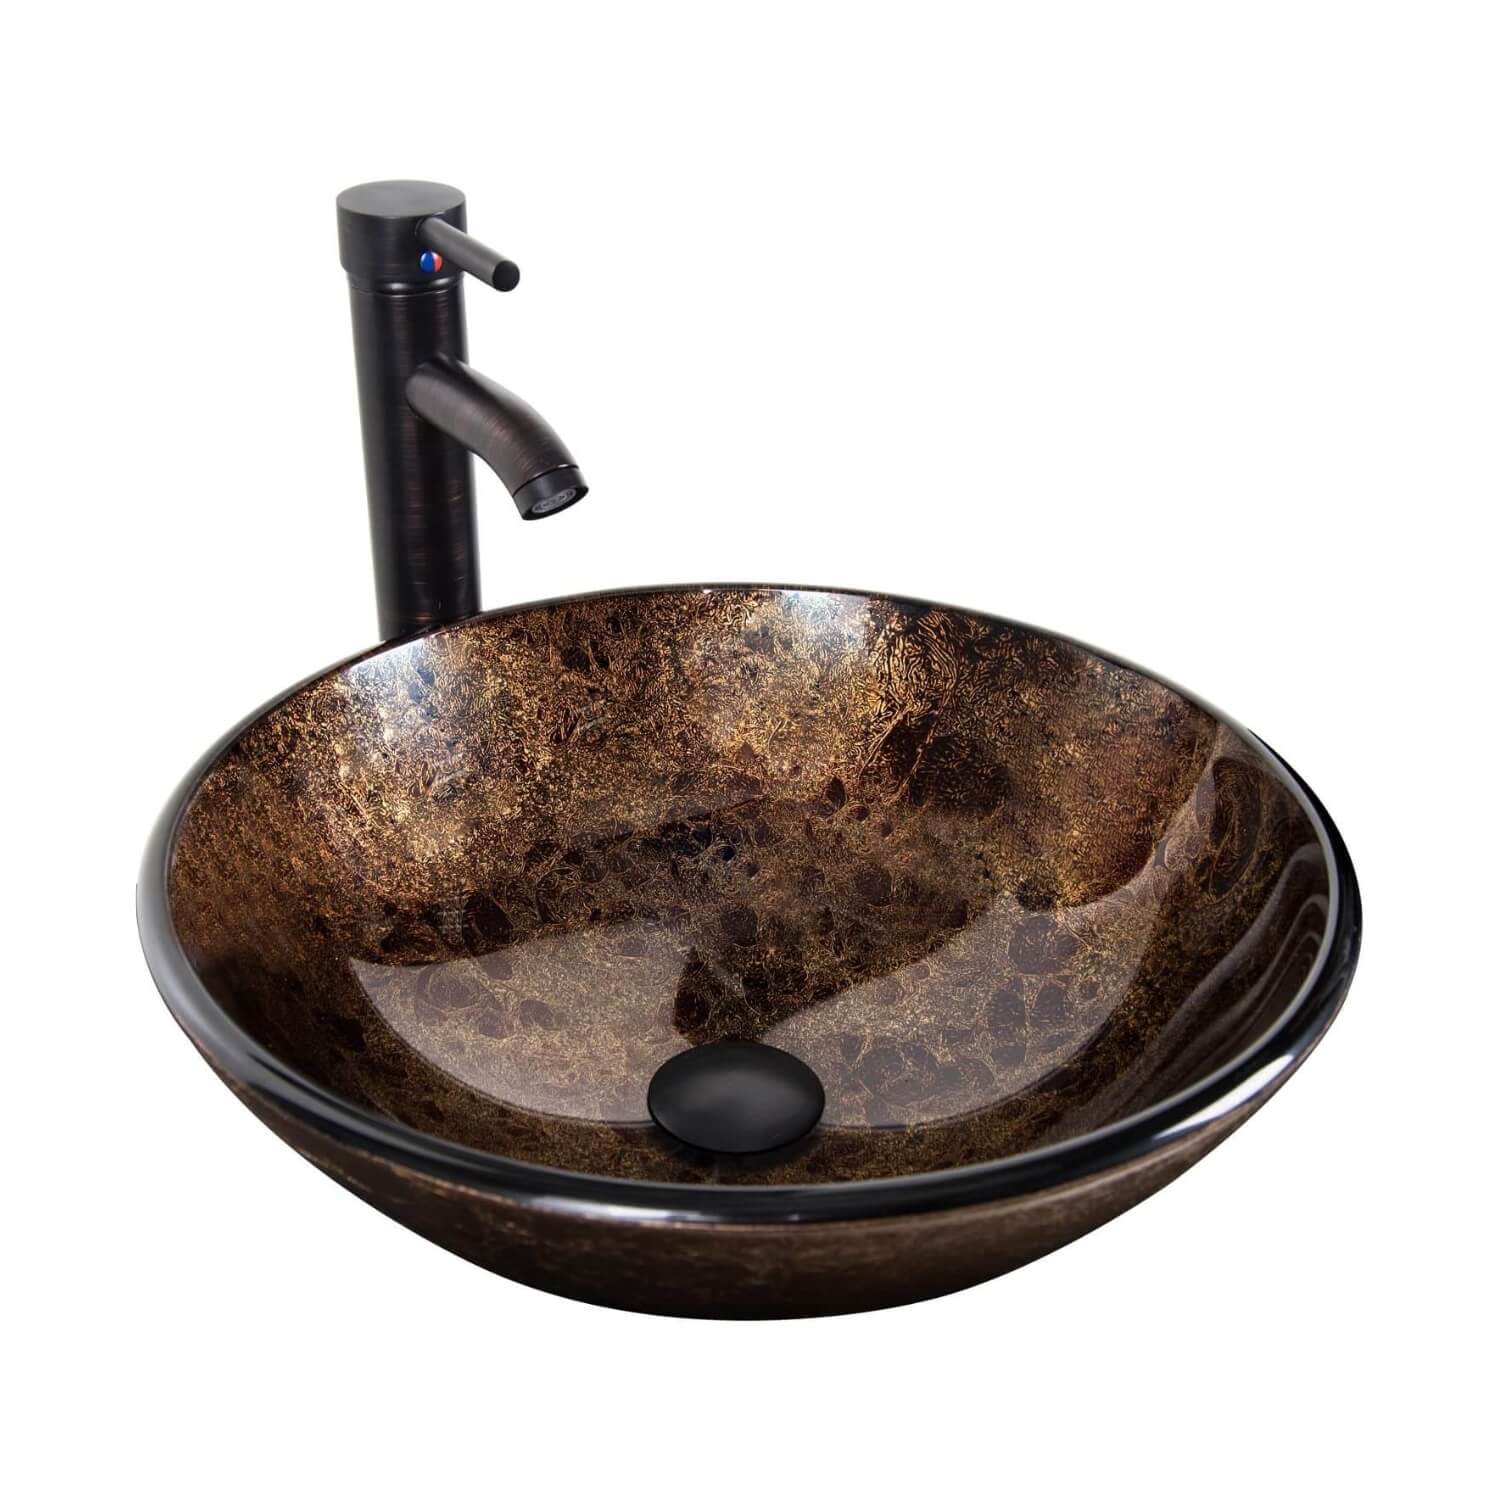 Elecwish brown glass sink